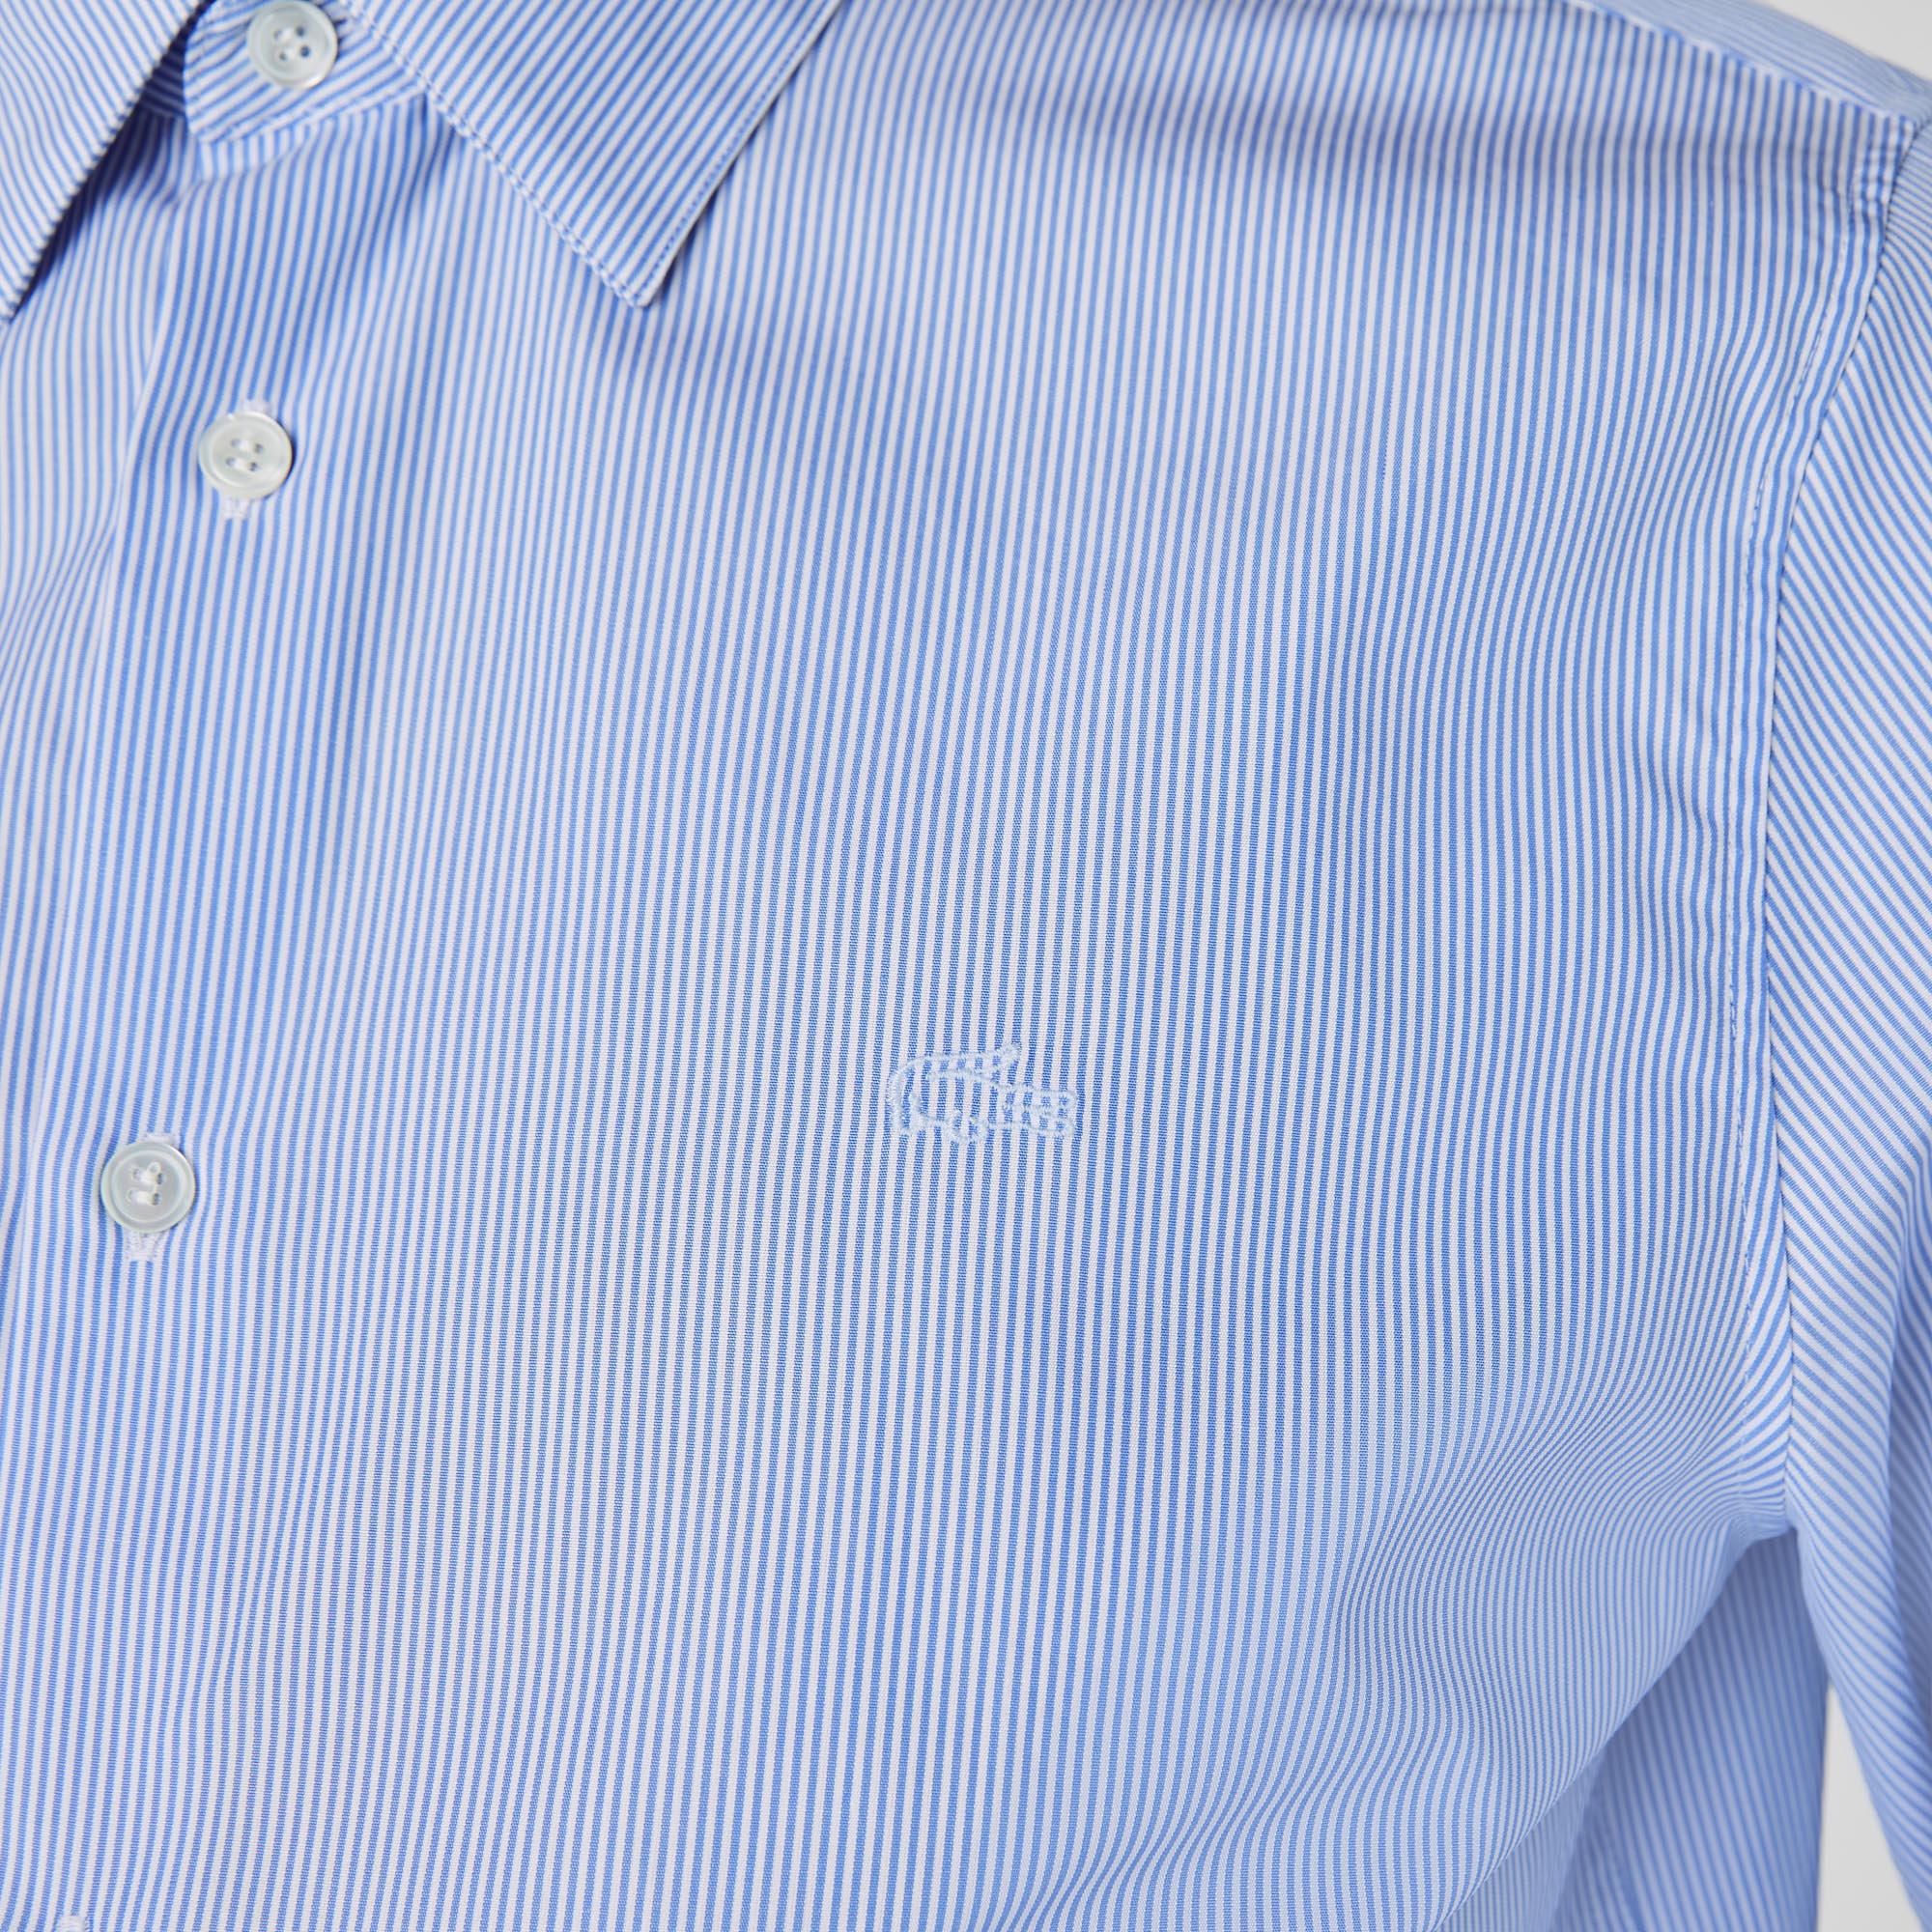 Lacoste Men's Regular Fit Striped Cotton Poplin Shirt